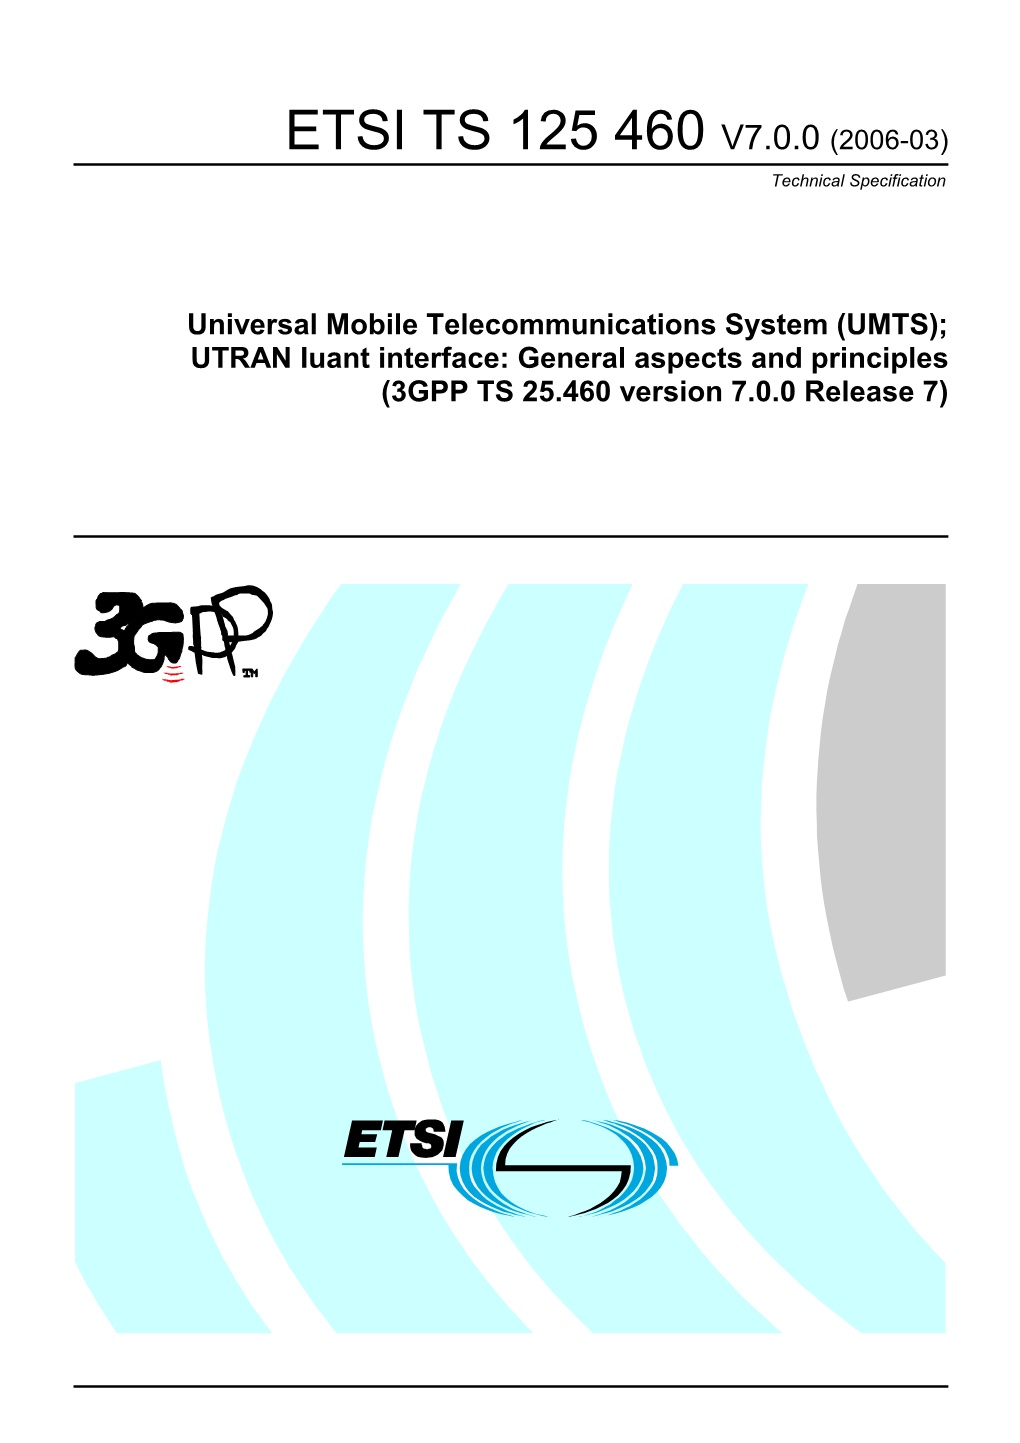 ETSI TS 125 460 V7.0.0 (2006-03) Technical Specification